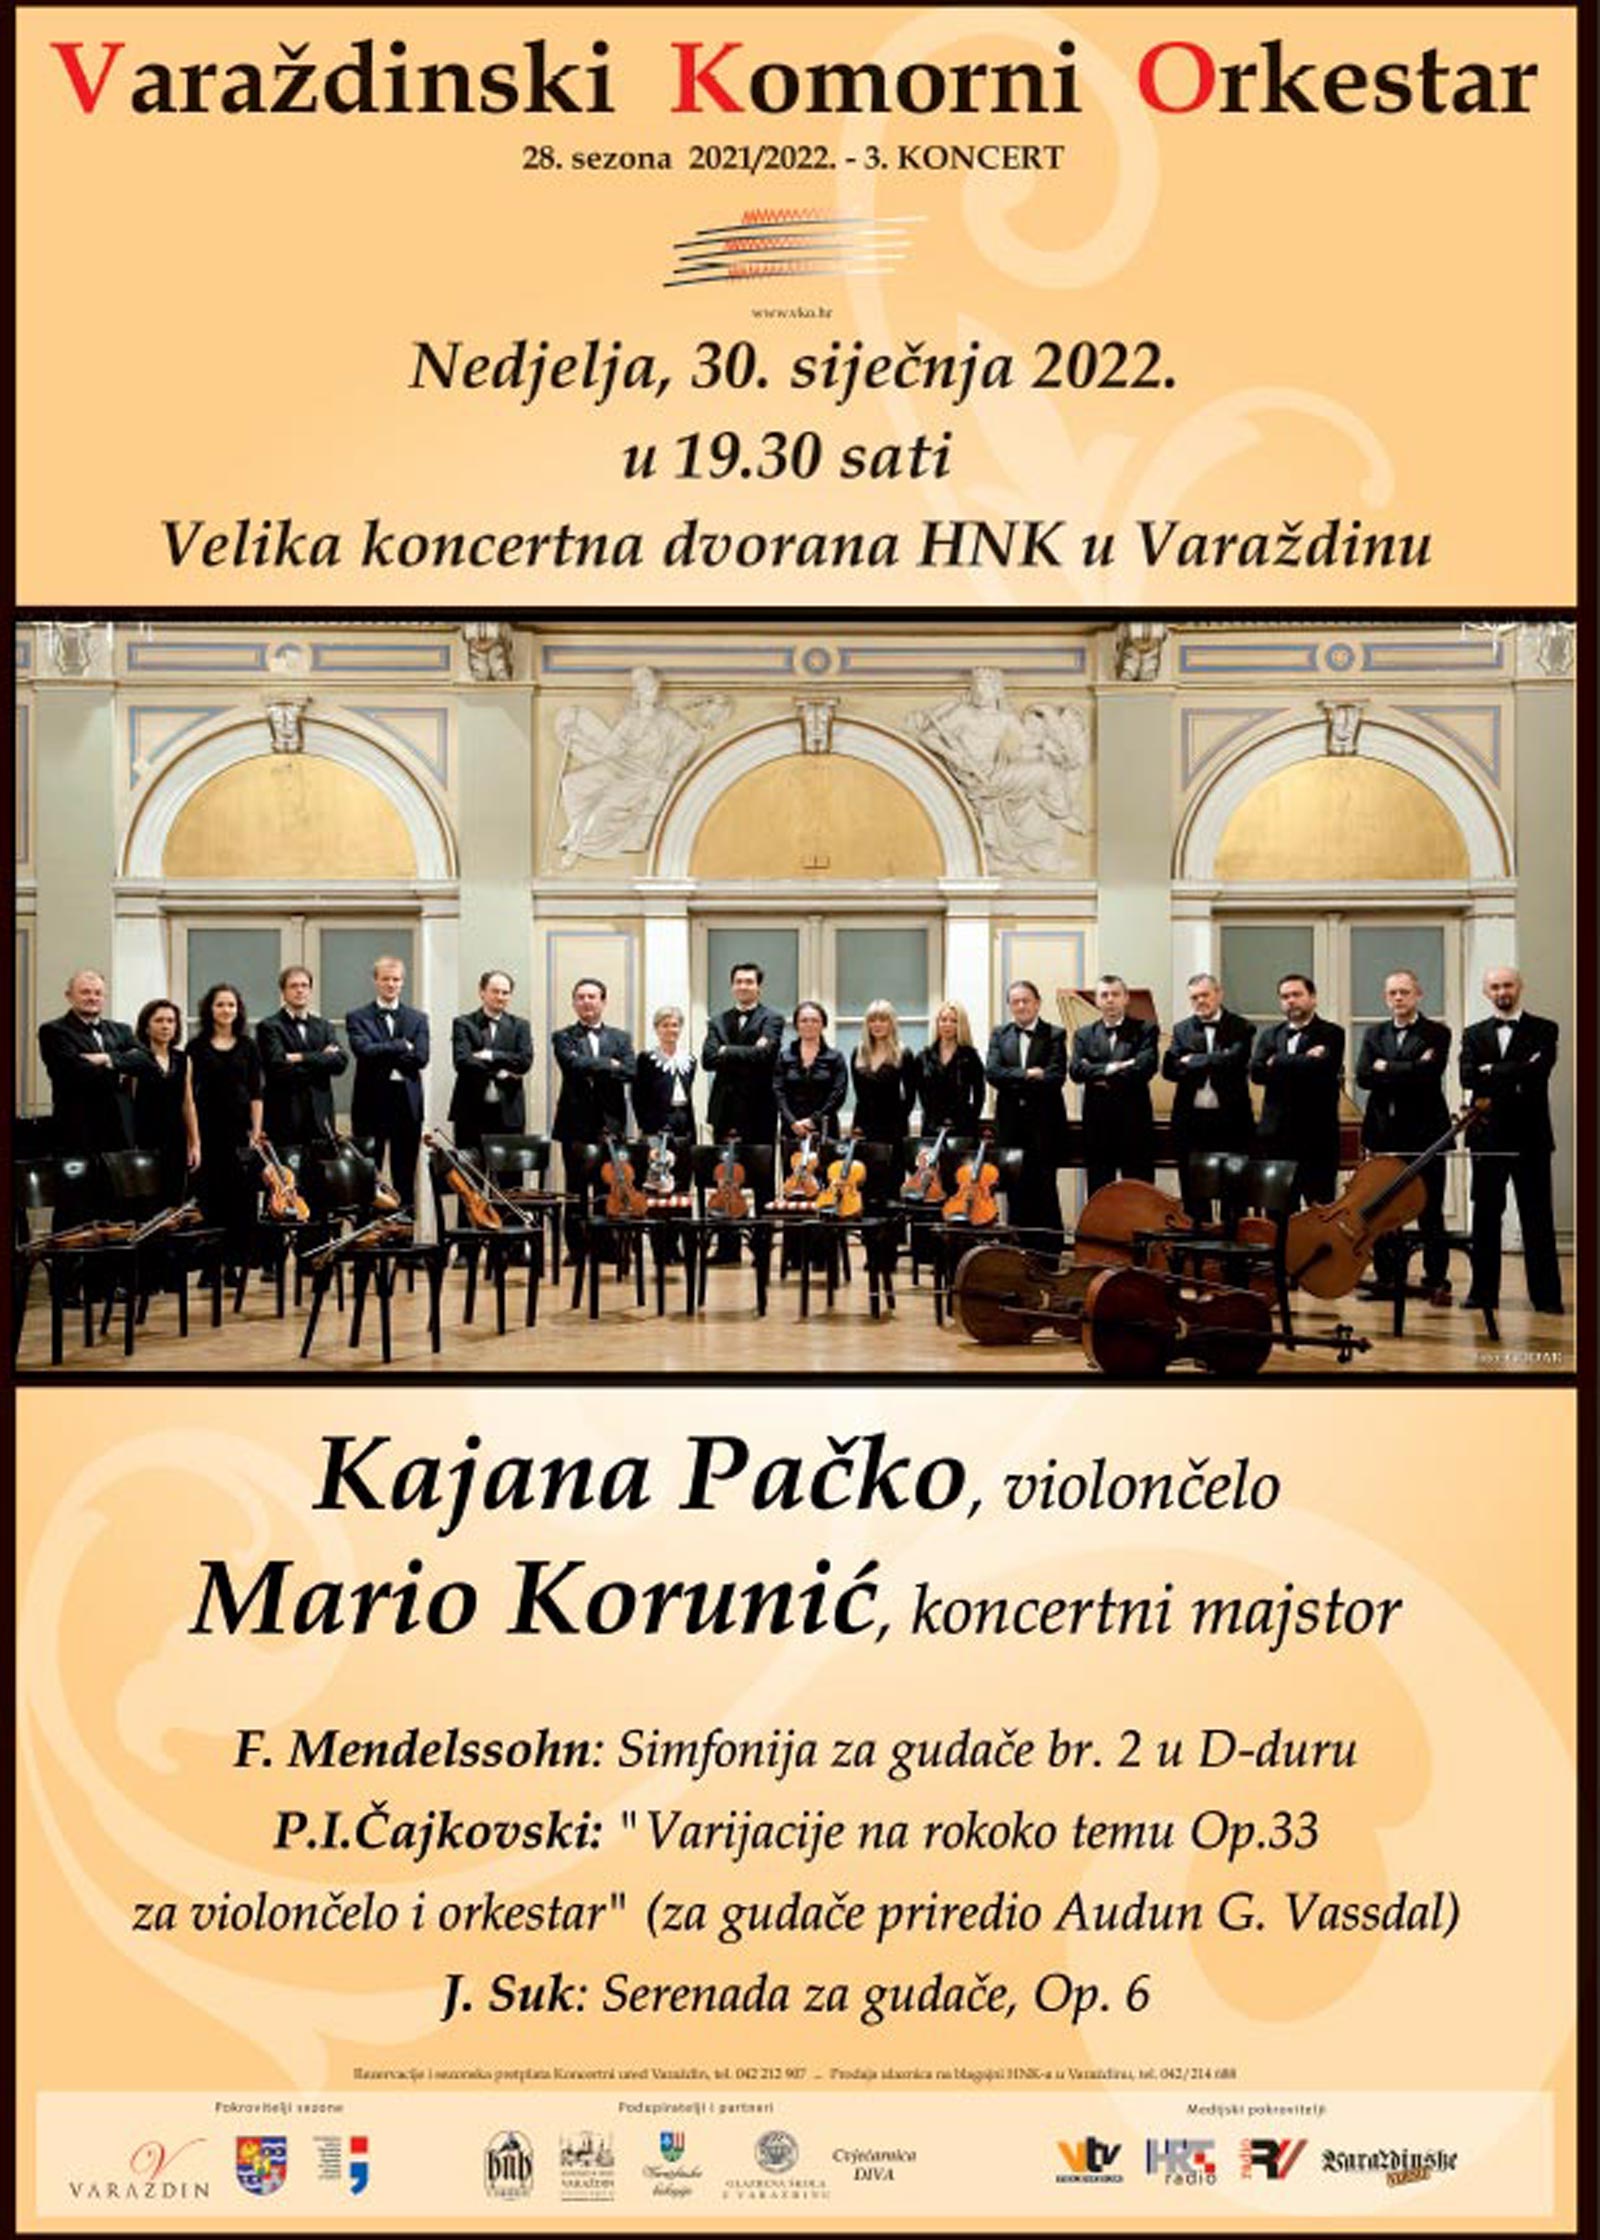 3. koncert 28. sezone Varaždinskog komornog orkestra